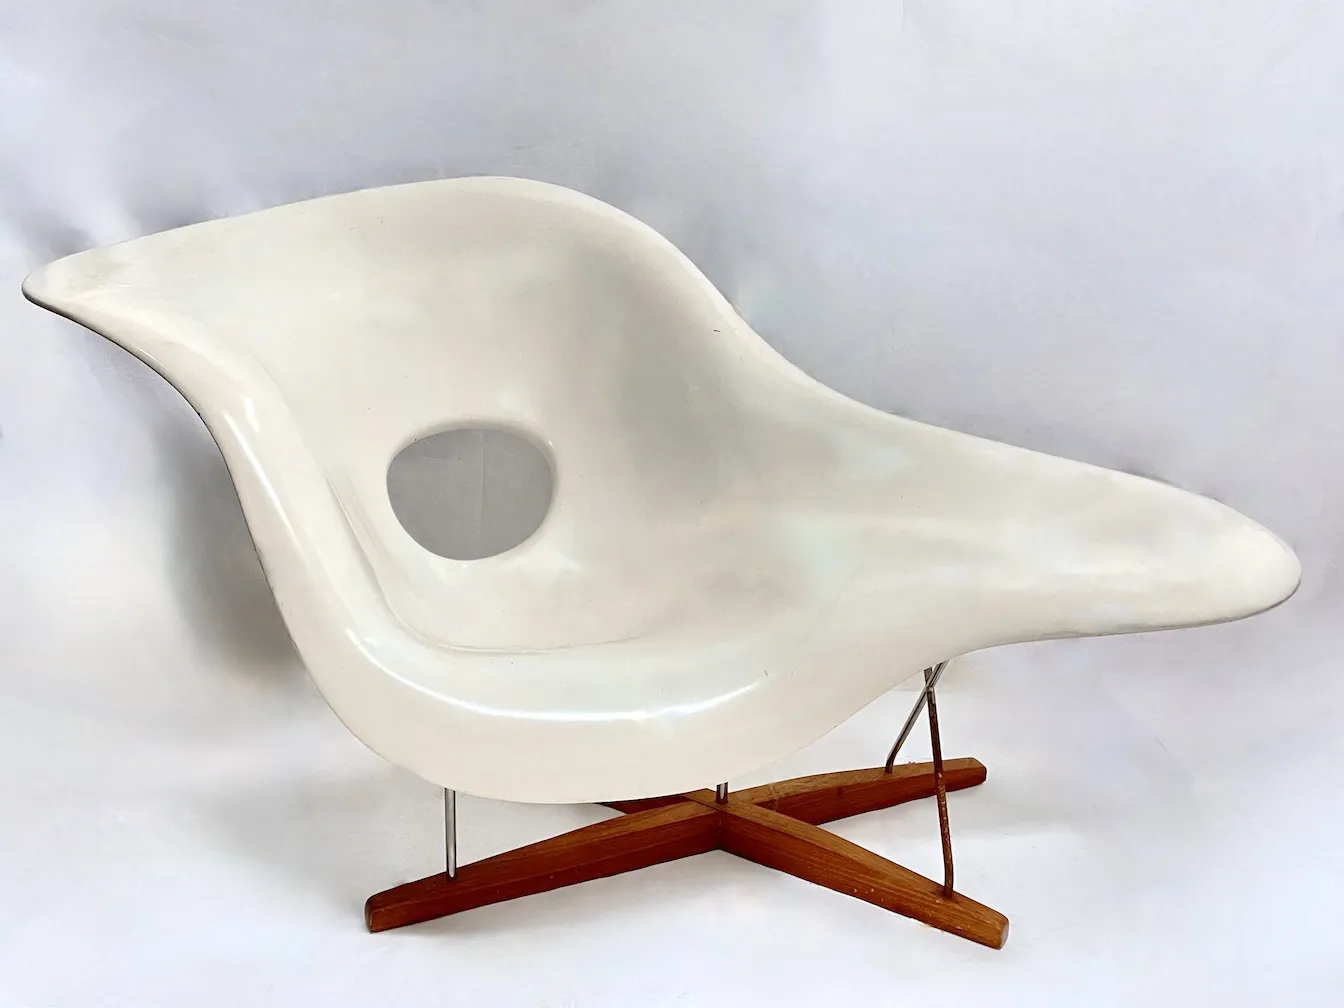 MCM Eames Fiberglass Chaise Lounge - White - Comfortable, Sturdy, Stylish